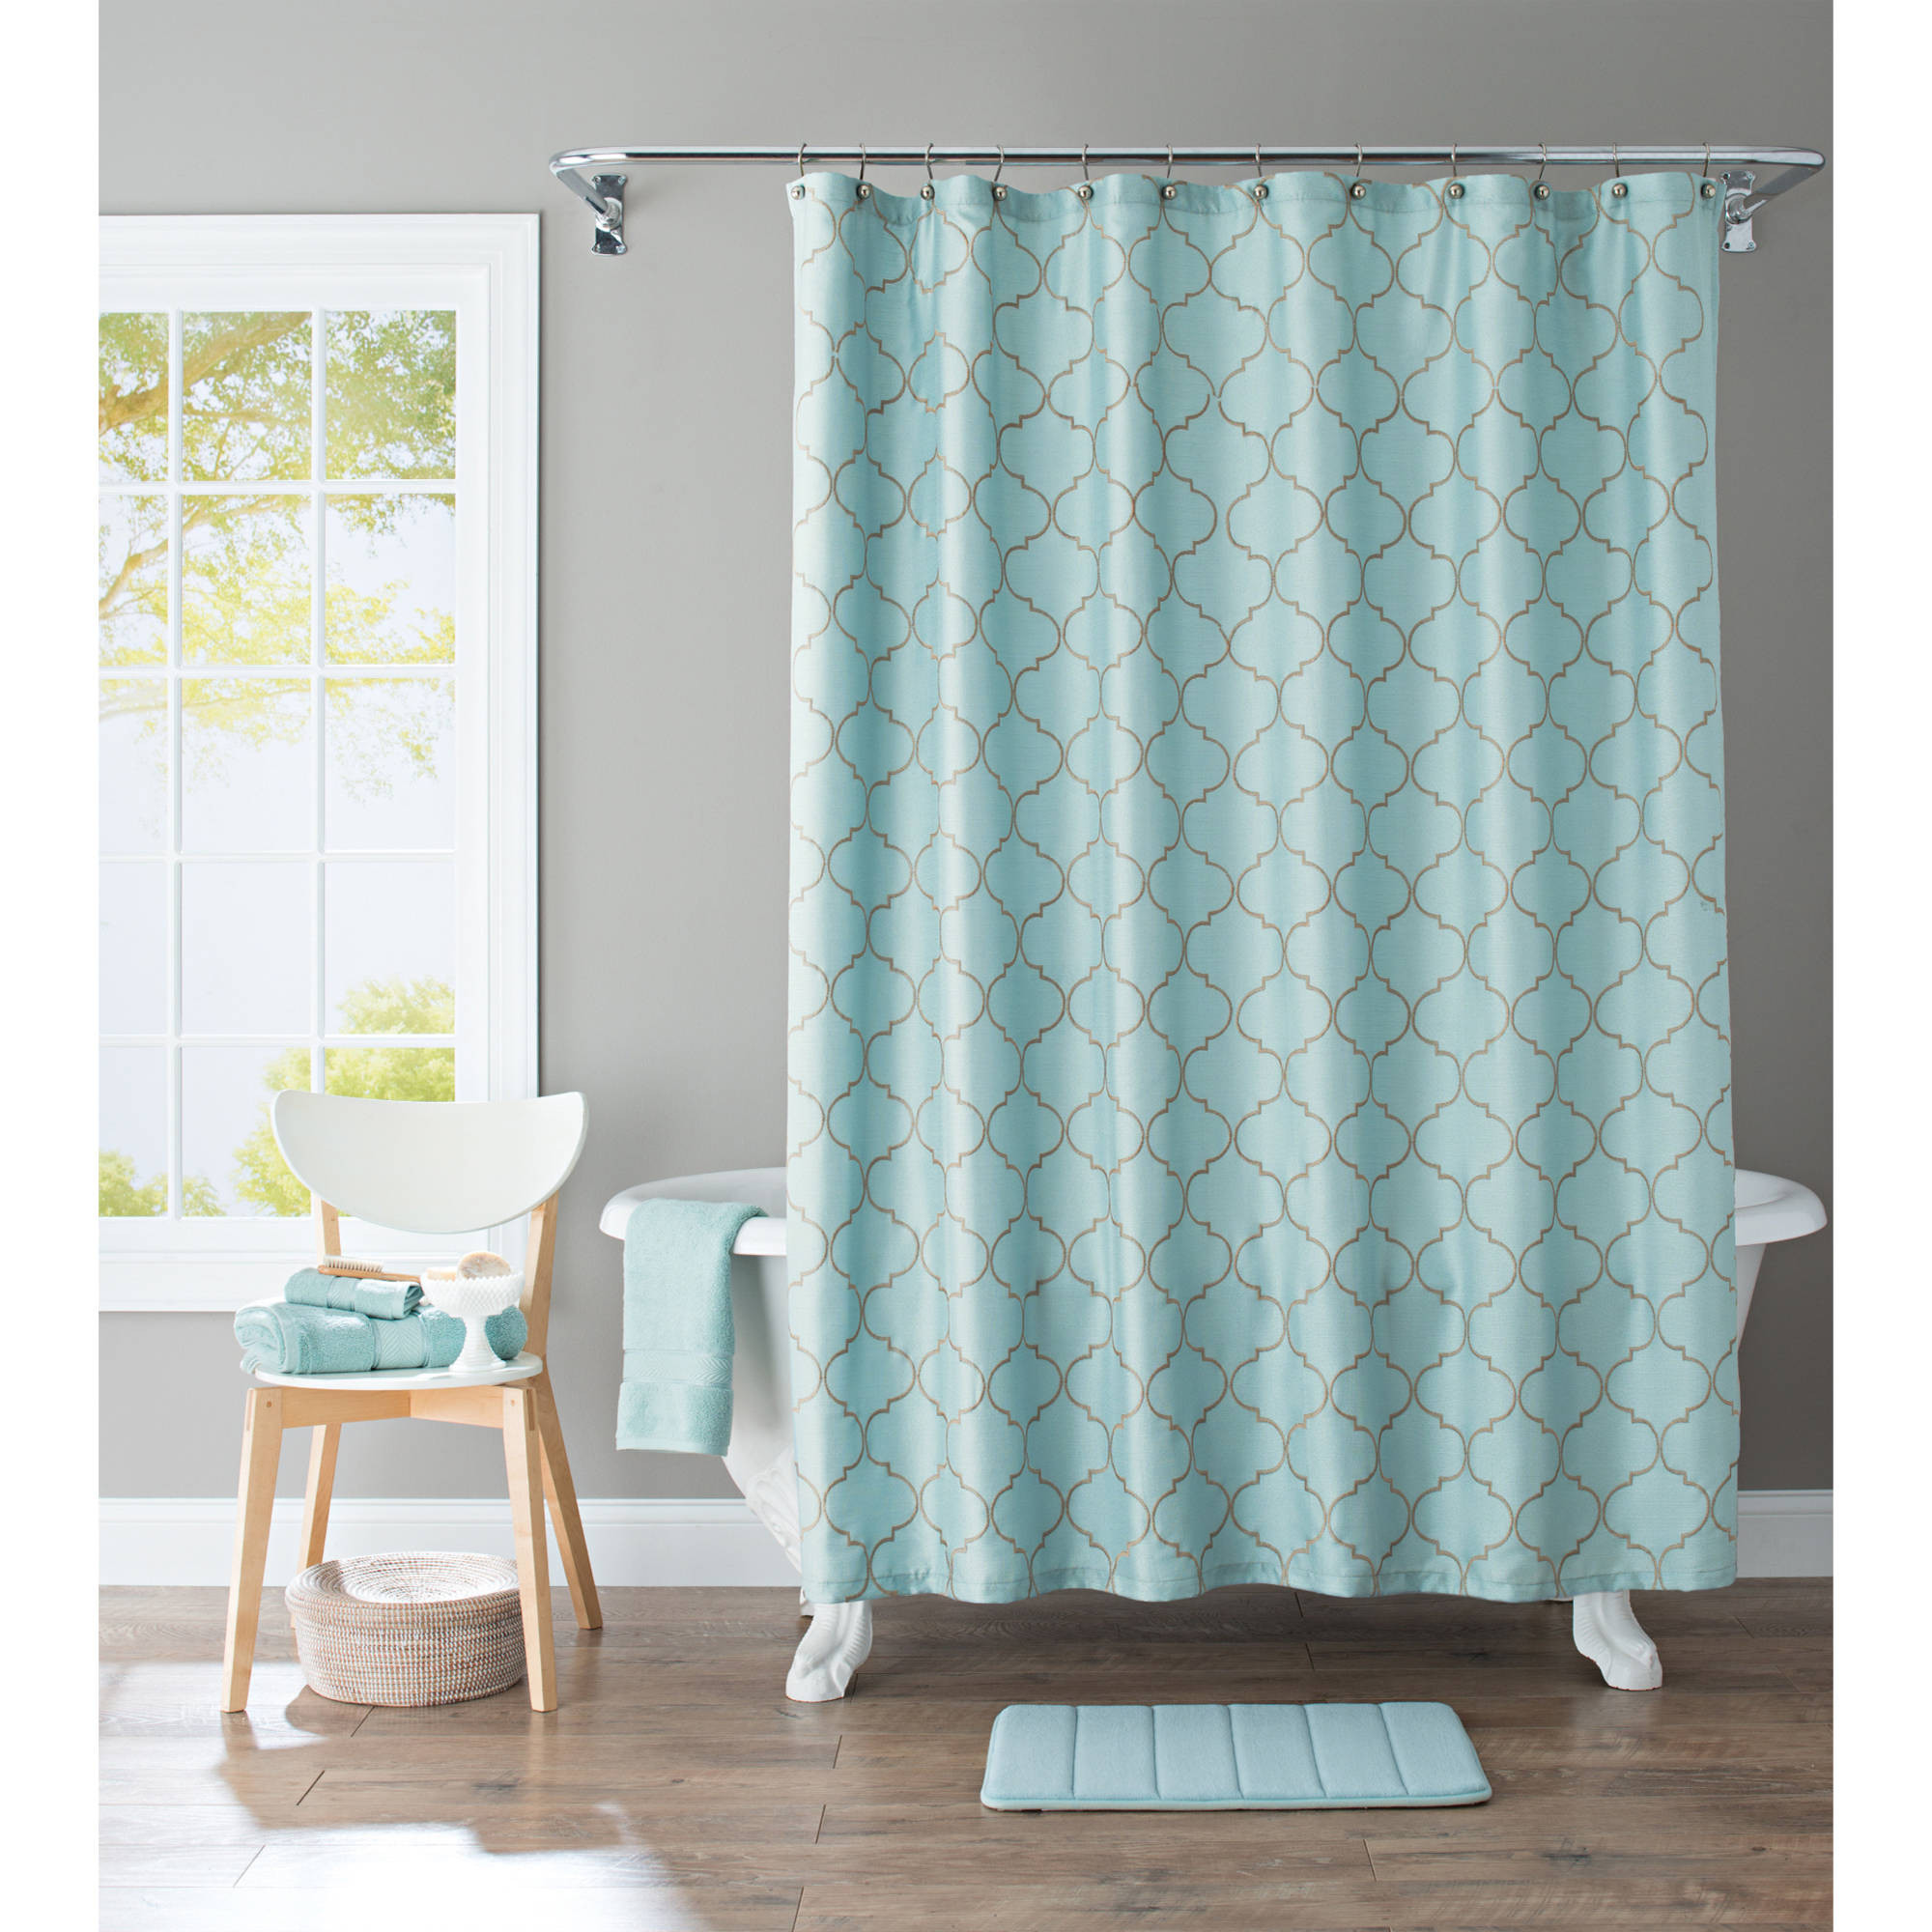 Bathroom Sets With Shower Curtain
 Curtain Walmart Shower Curtain For Cute Your Bathroom